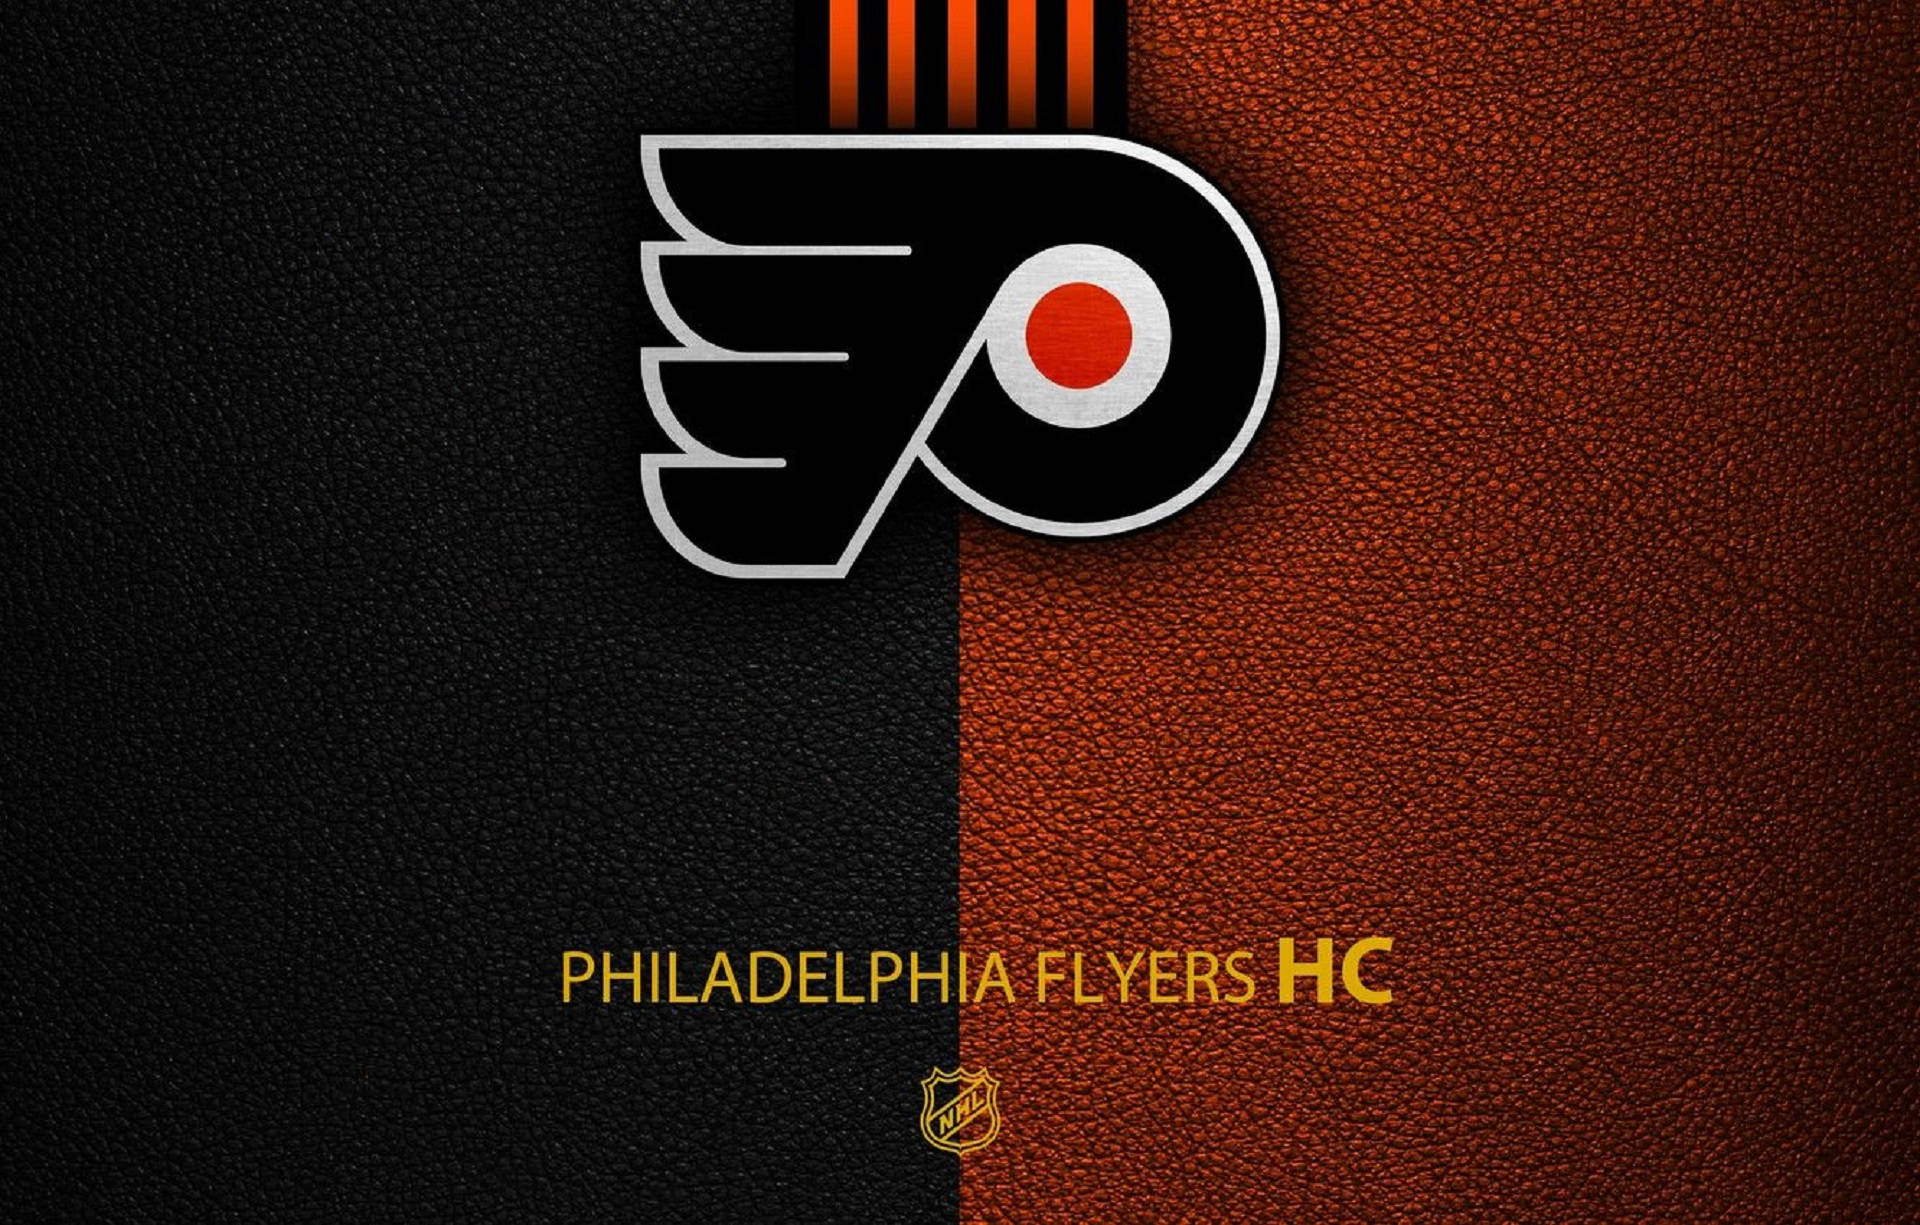 Philadelphia Flyers Logo On Leather